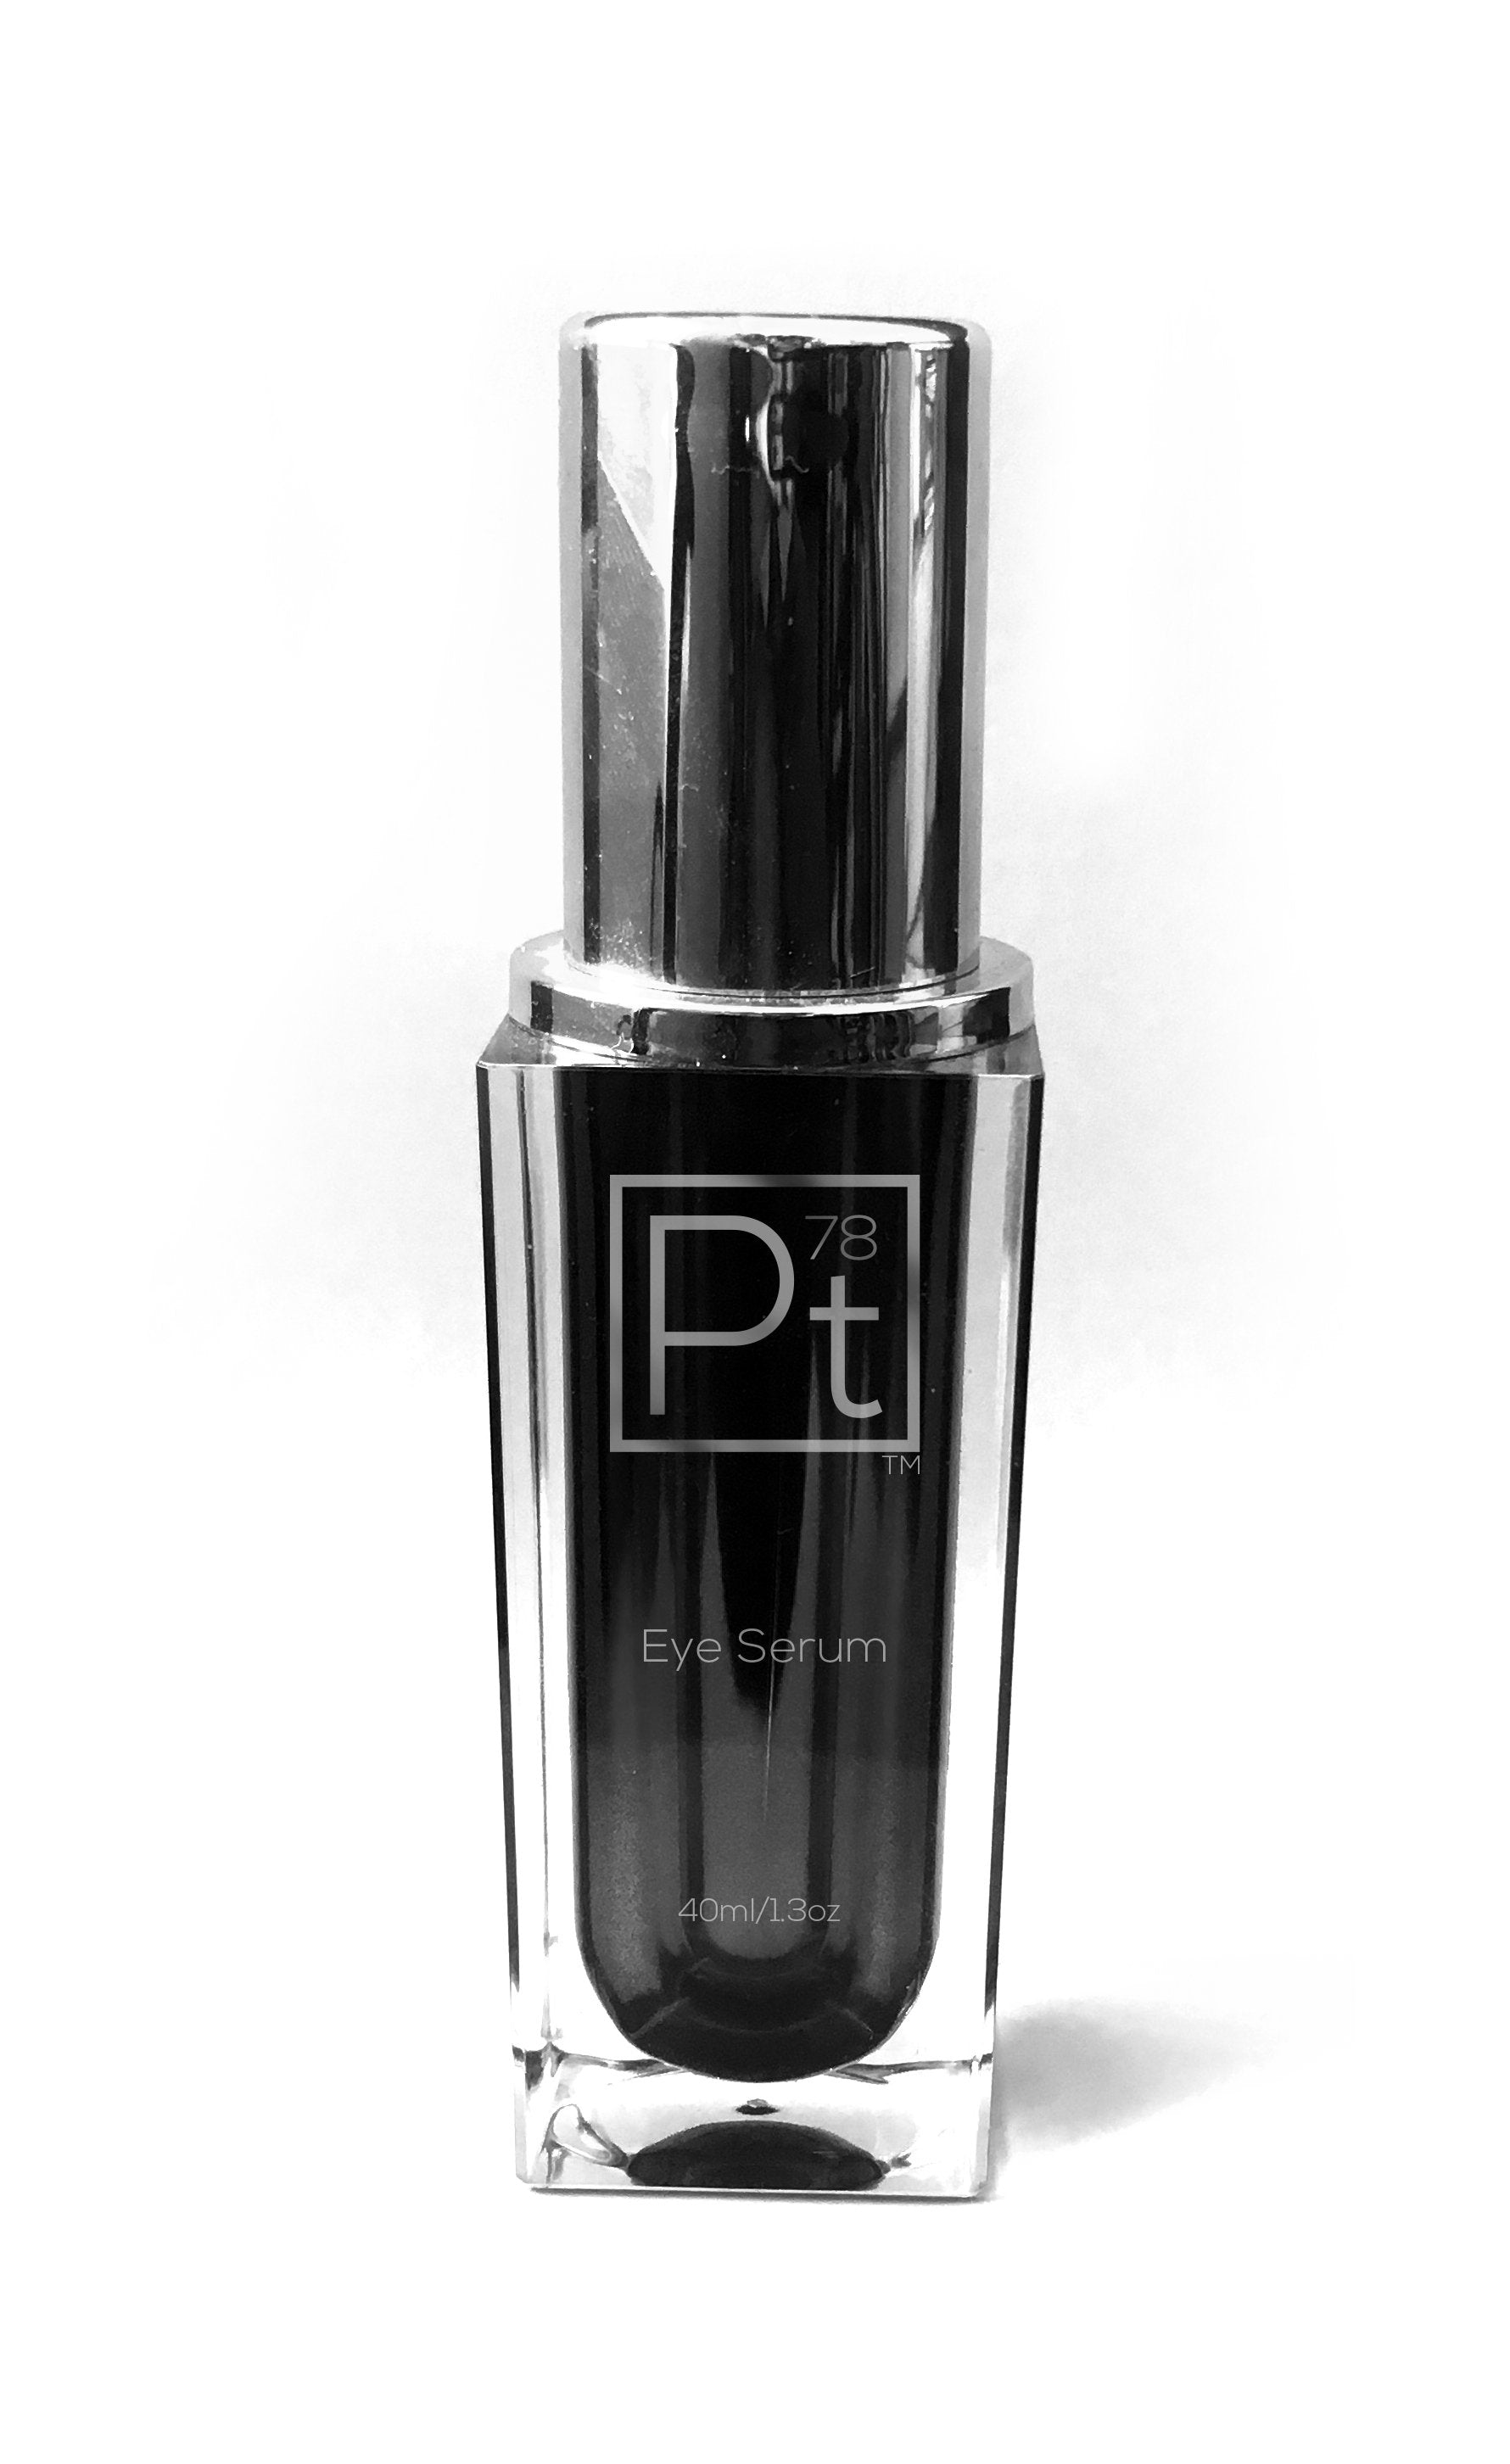 Bottle of the Platinum Eye Serum